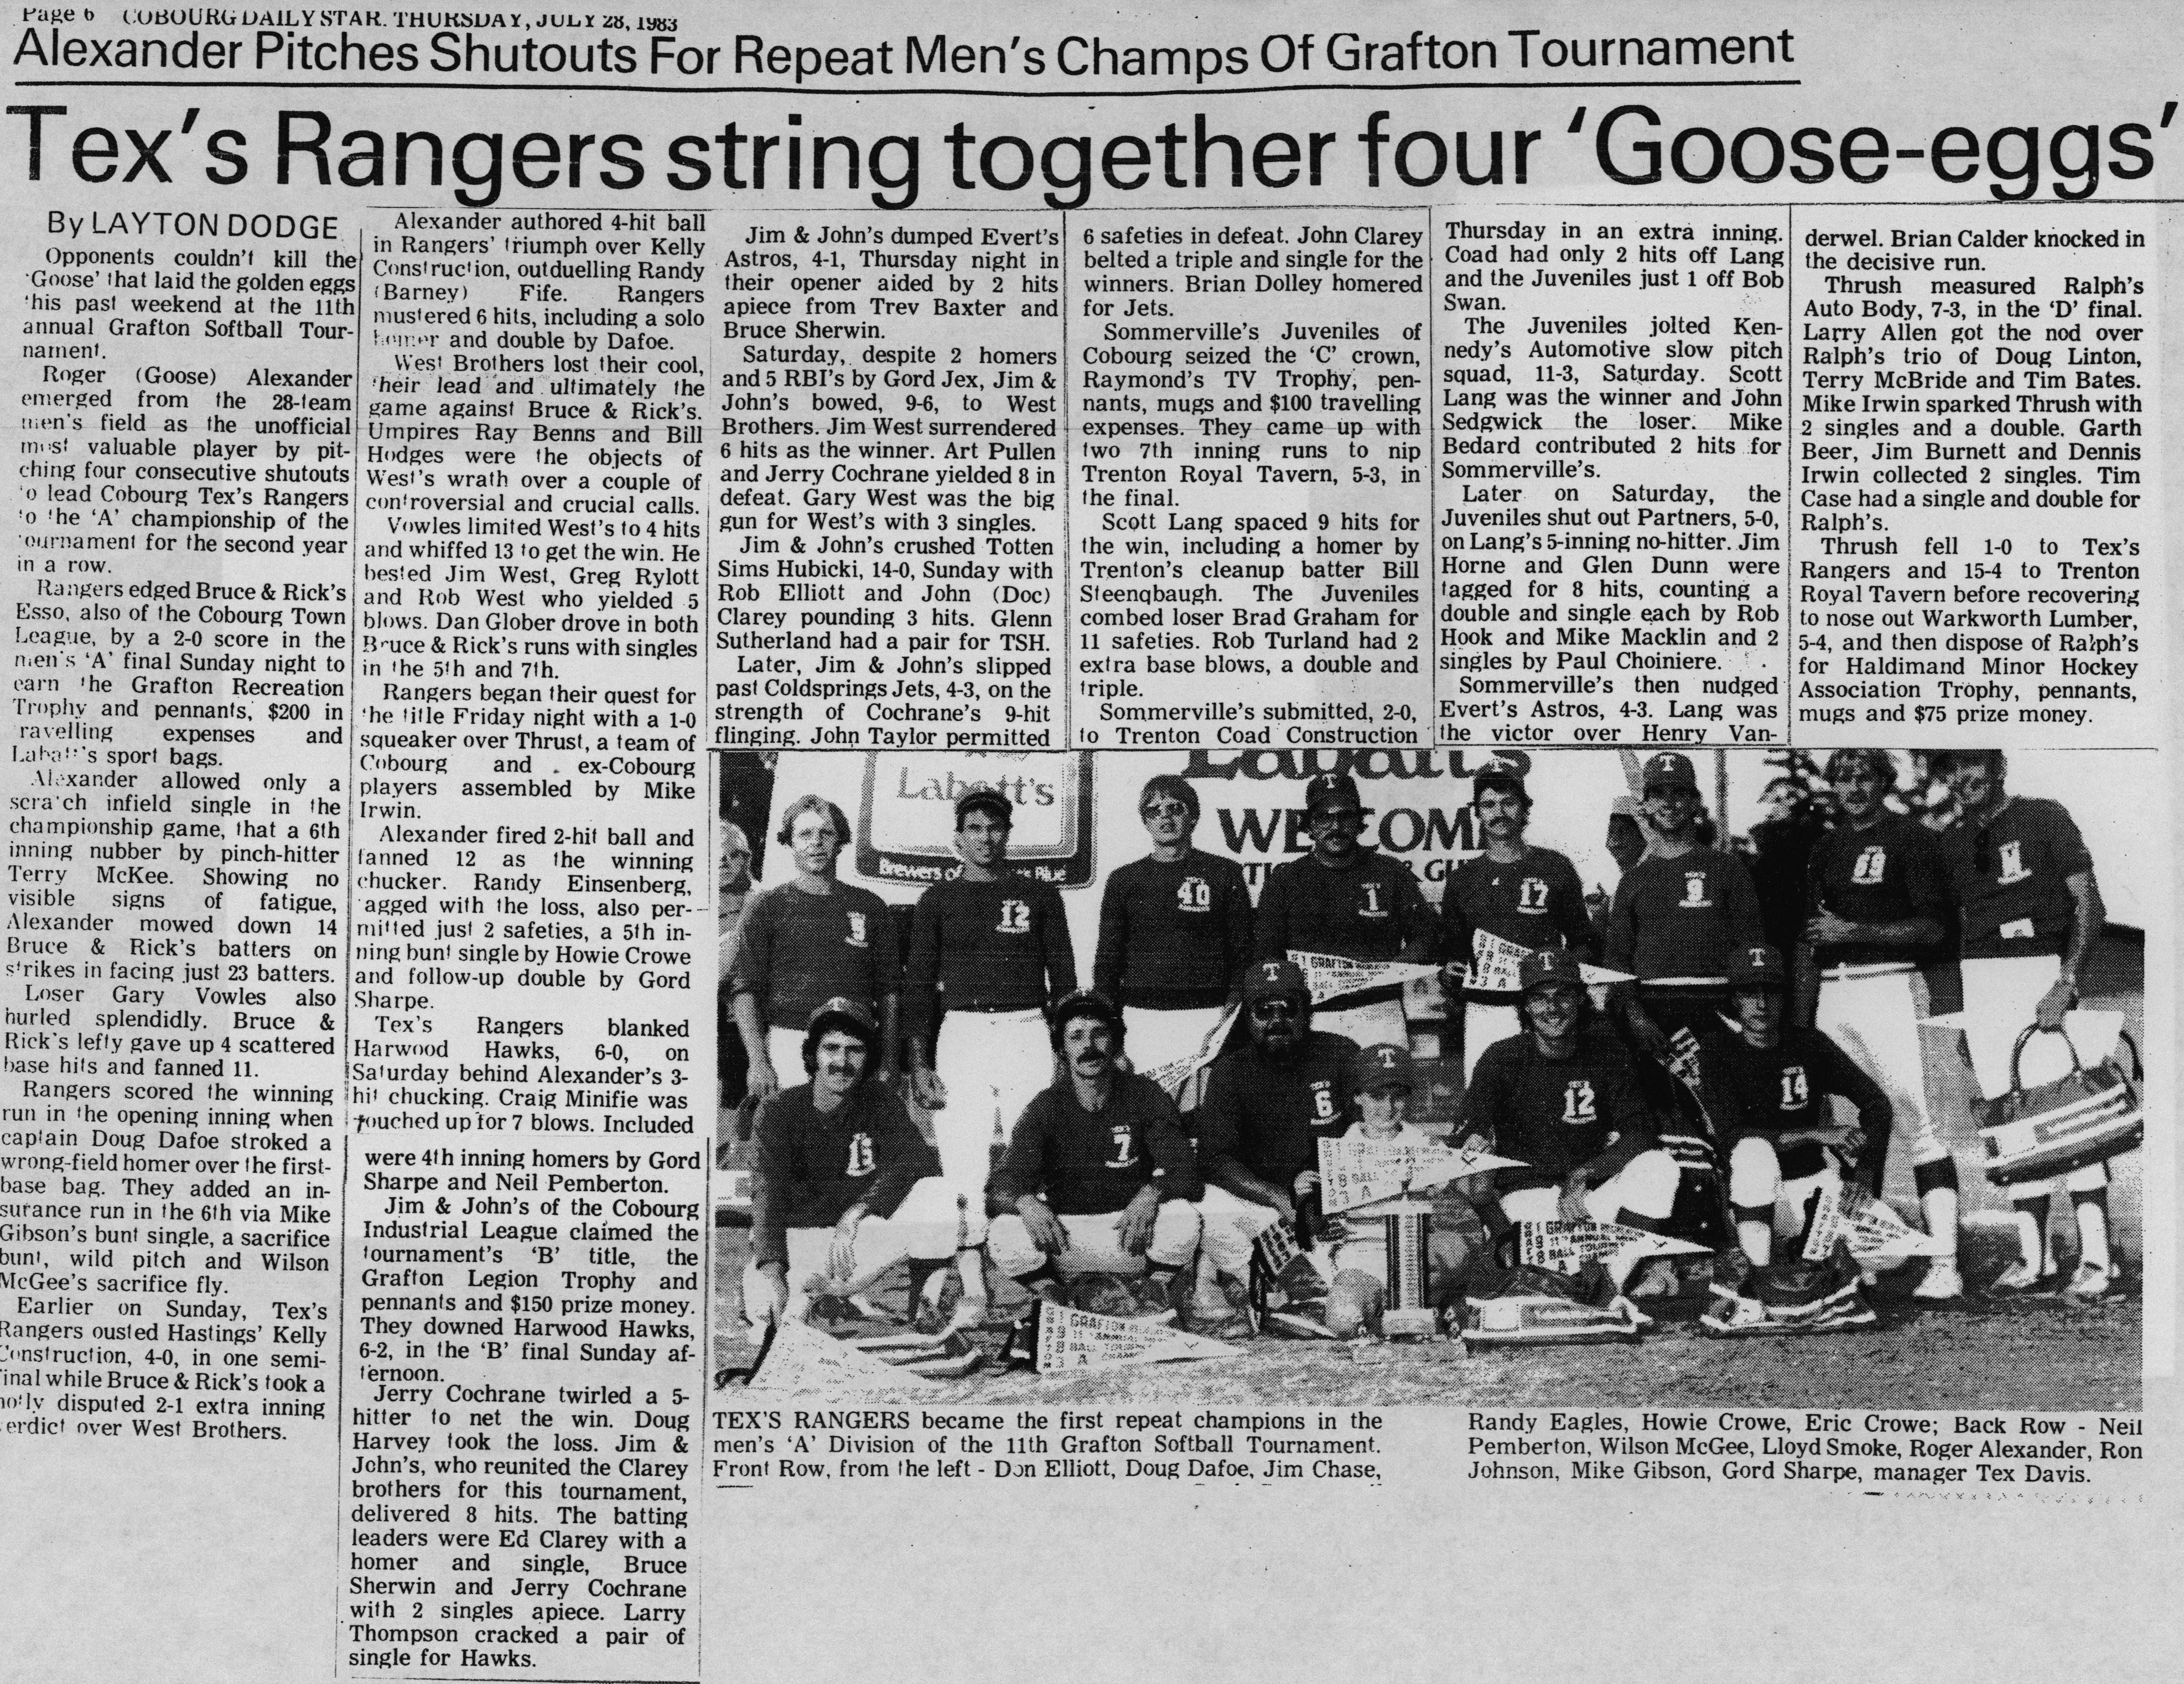 Softball -Grafton Tournament -1983 -Summary and A Champs-Cobourg Texs Rangers